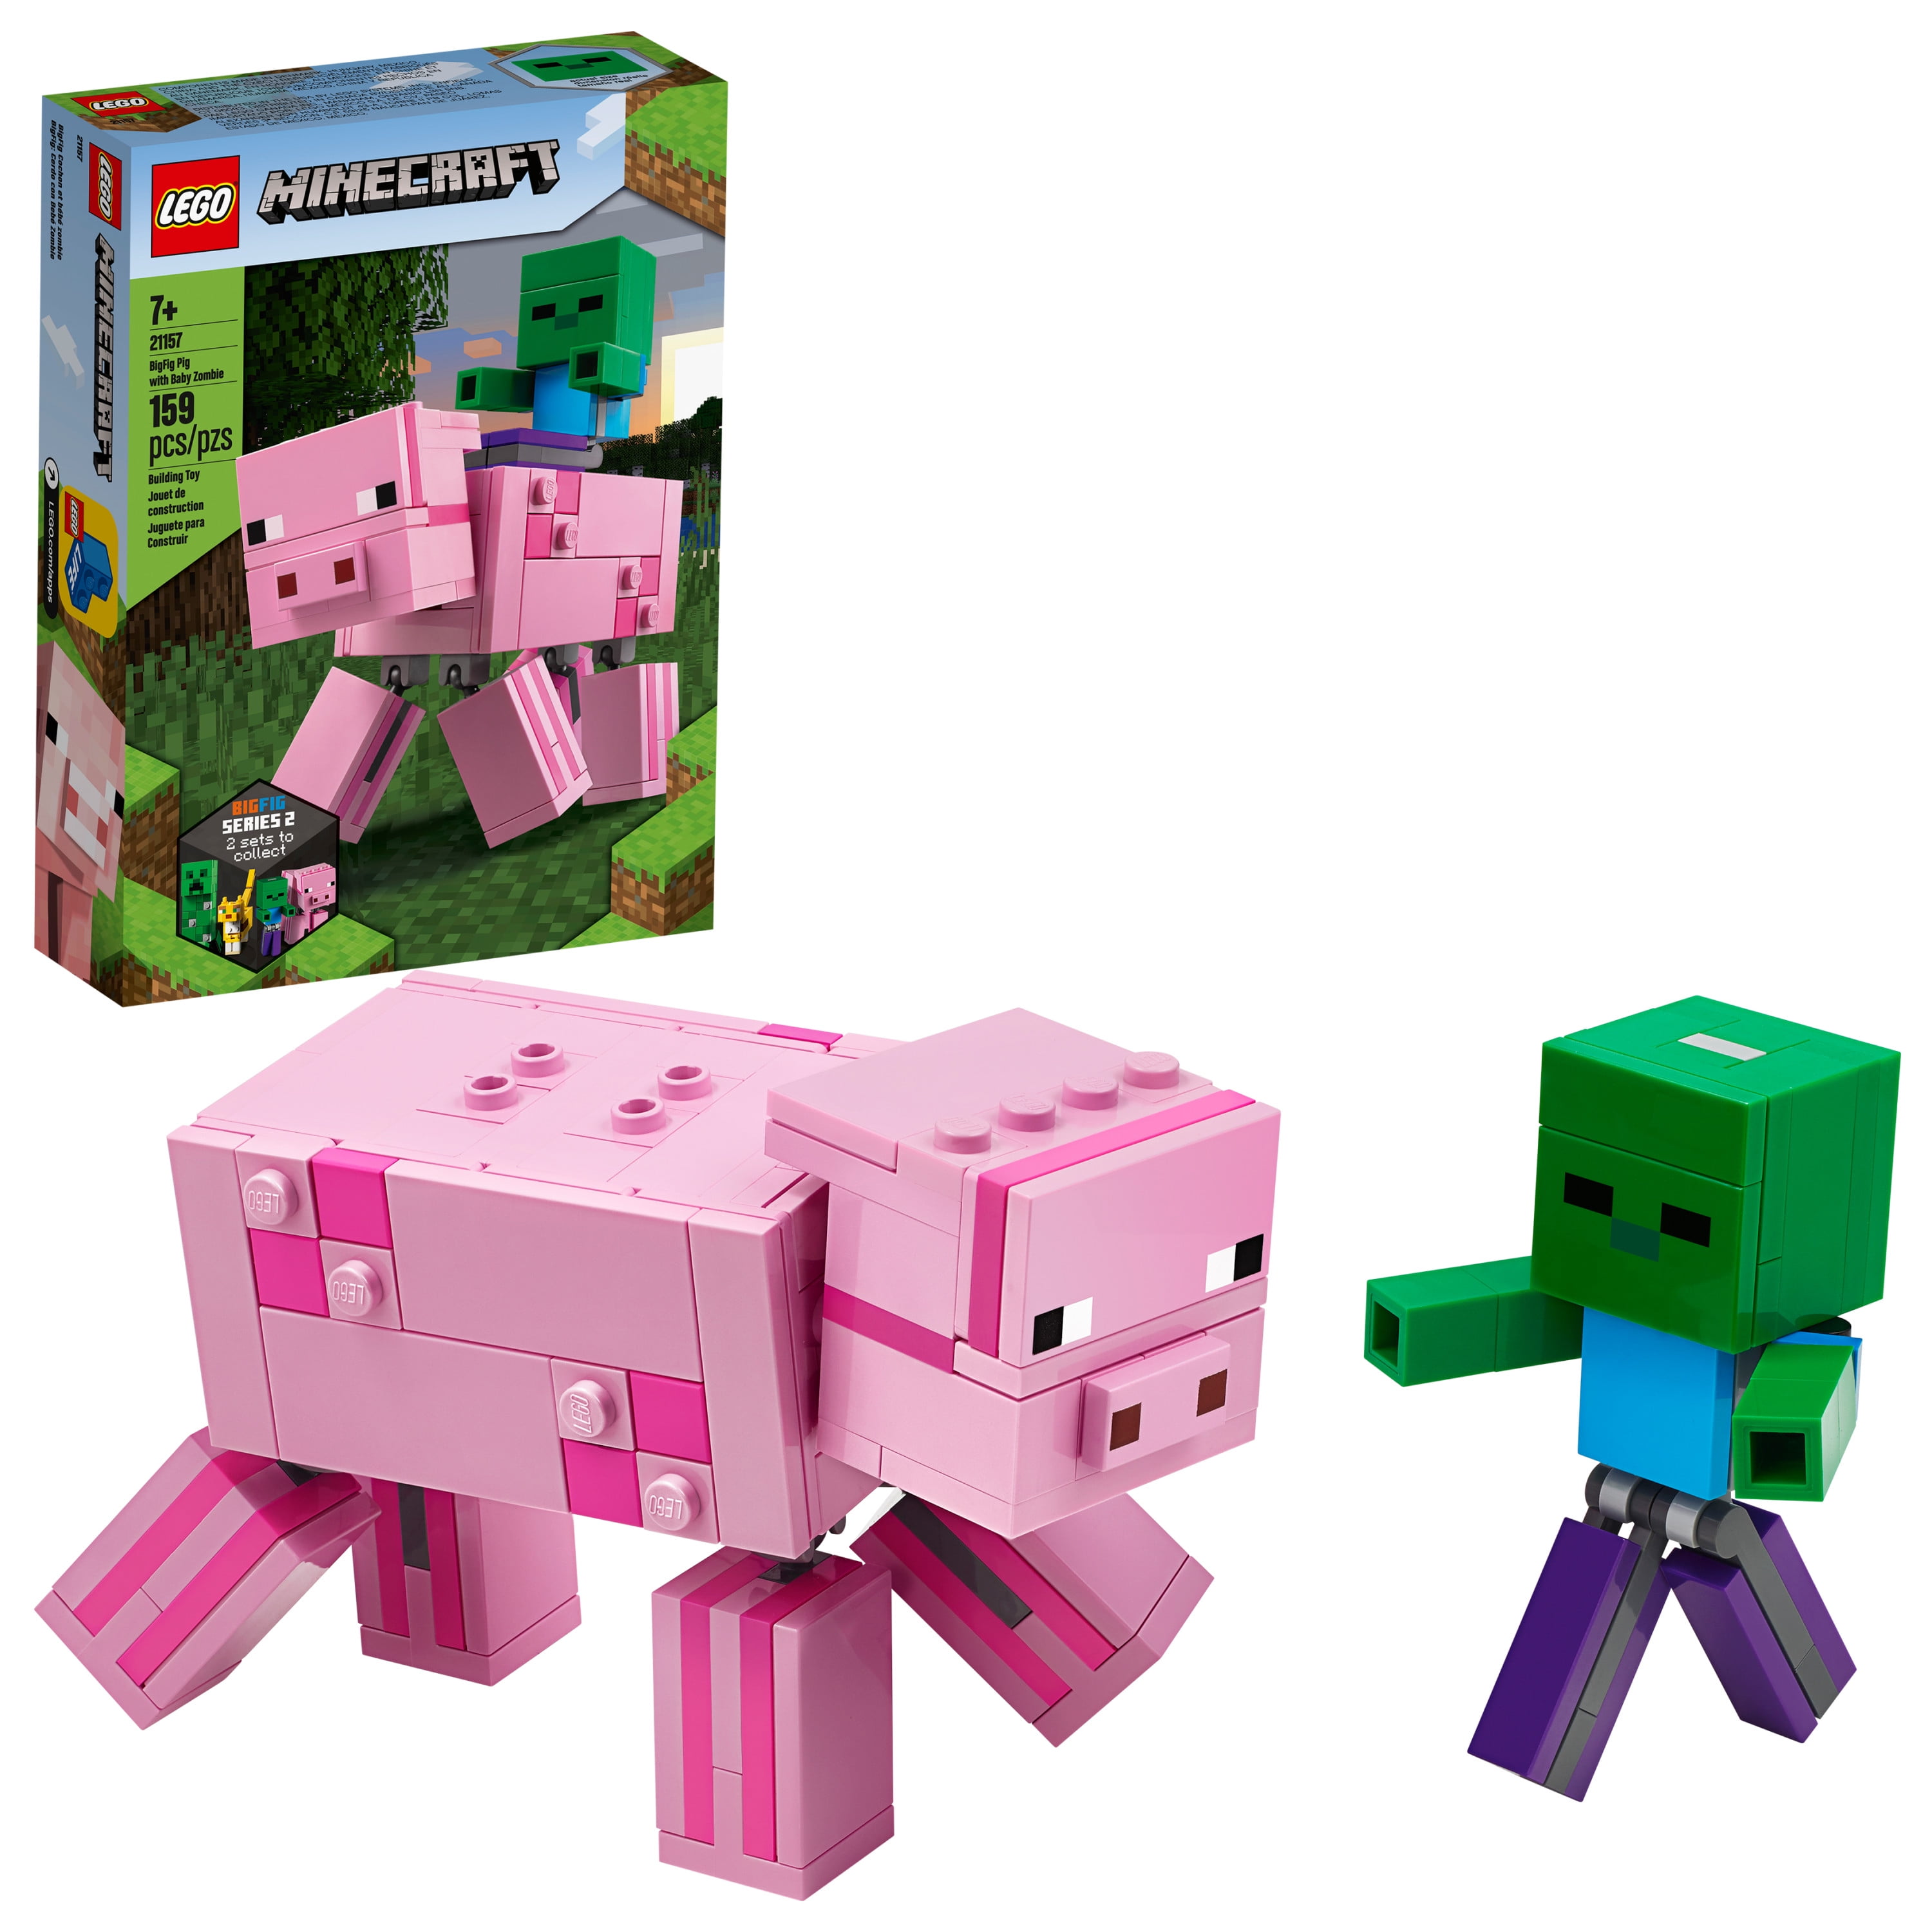 FREE SHIPPING 159 Piece New Lego Minecraft BigFig Pig with Baby Zombie 21157 